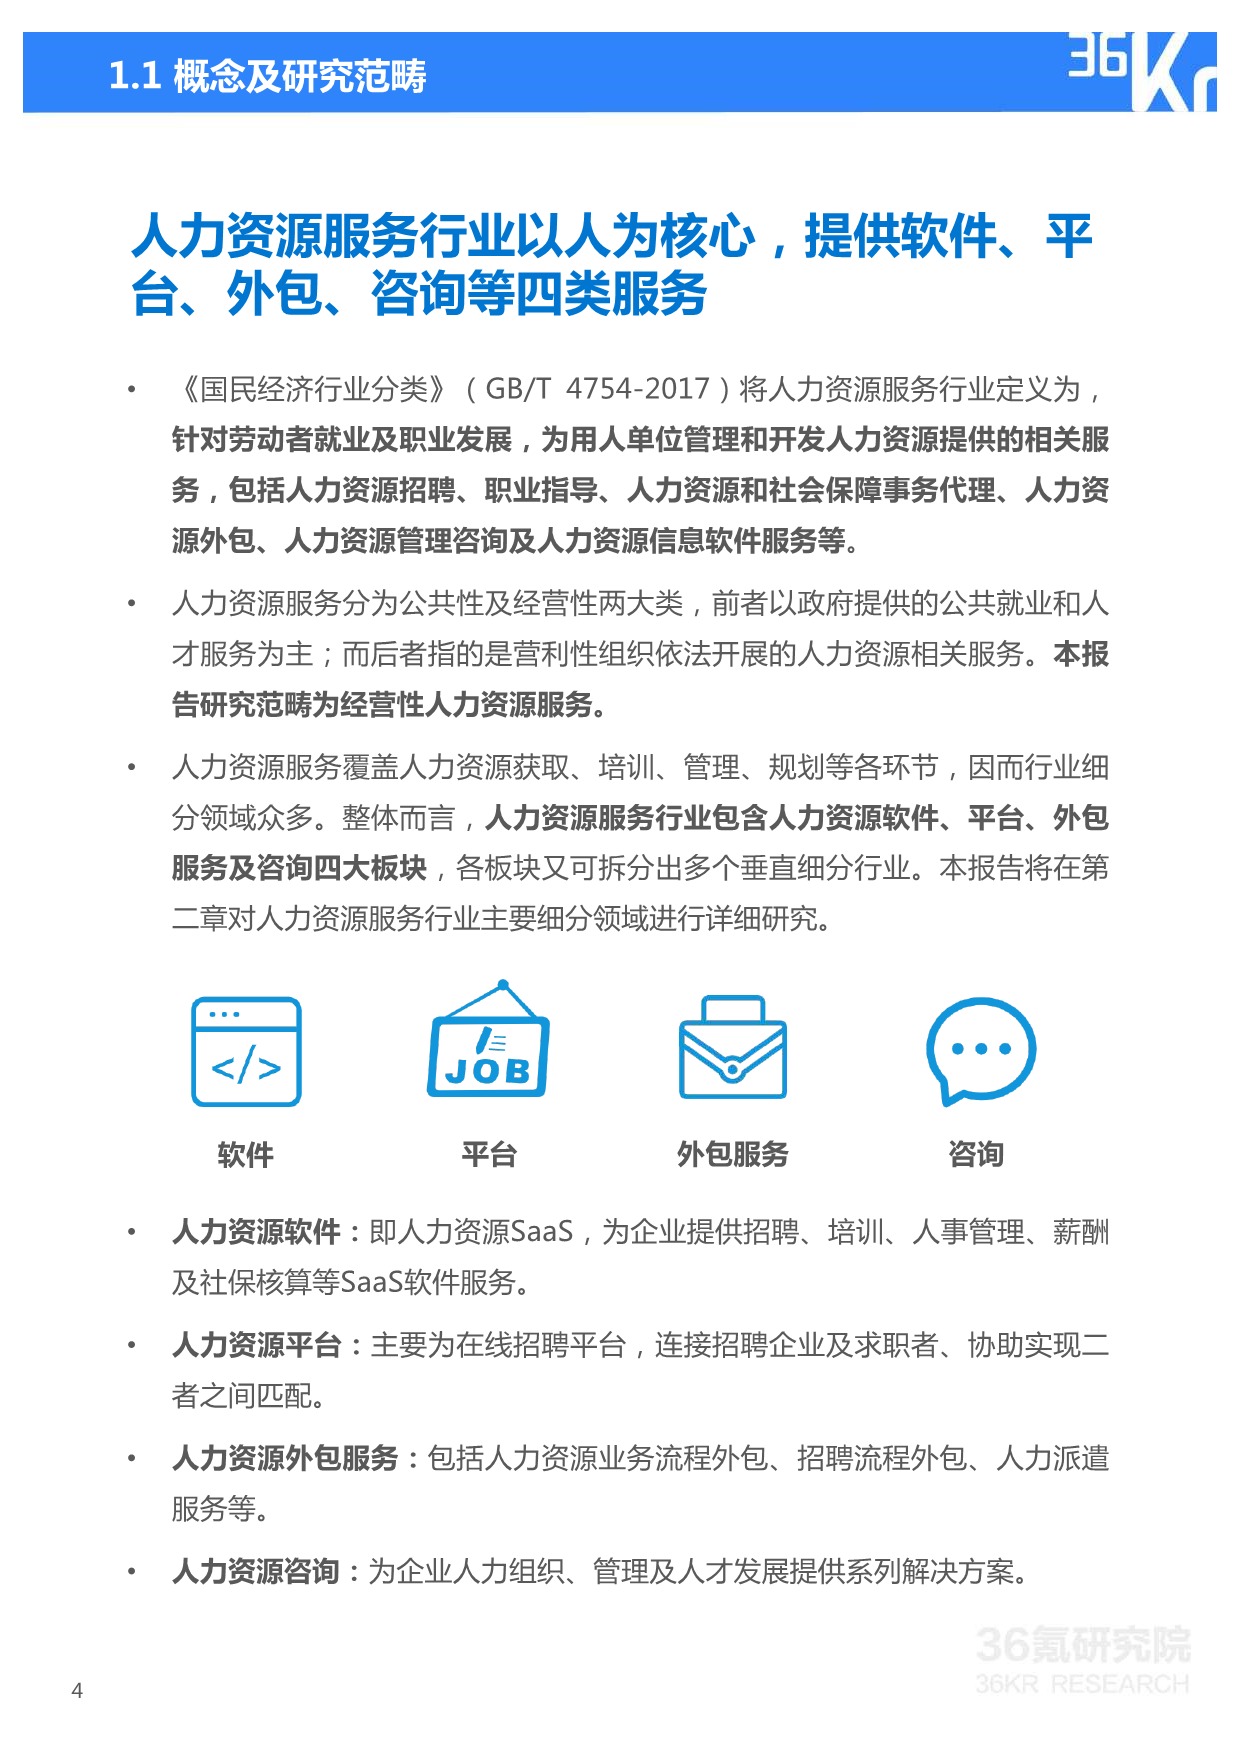 36Kr-2021年中国人力资源服务行业研究报告_4.jpeg